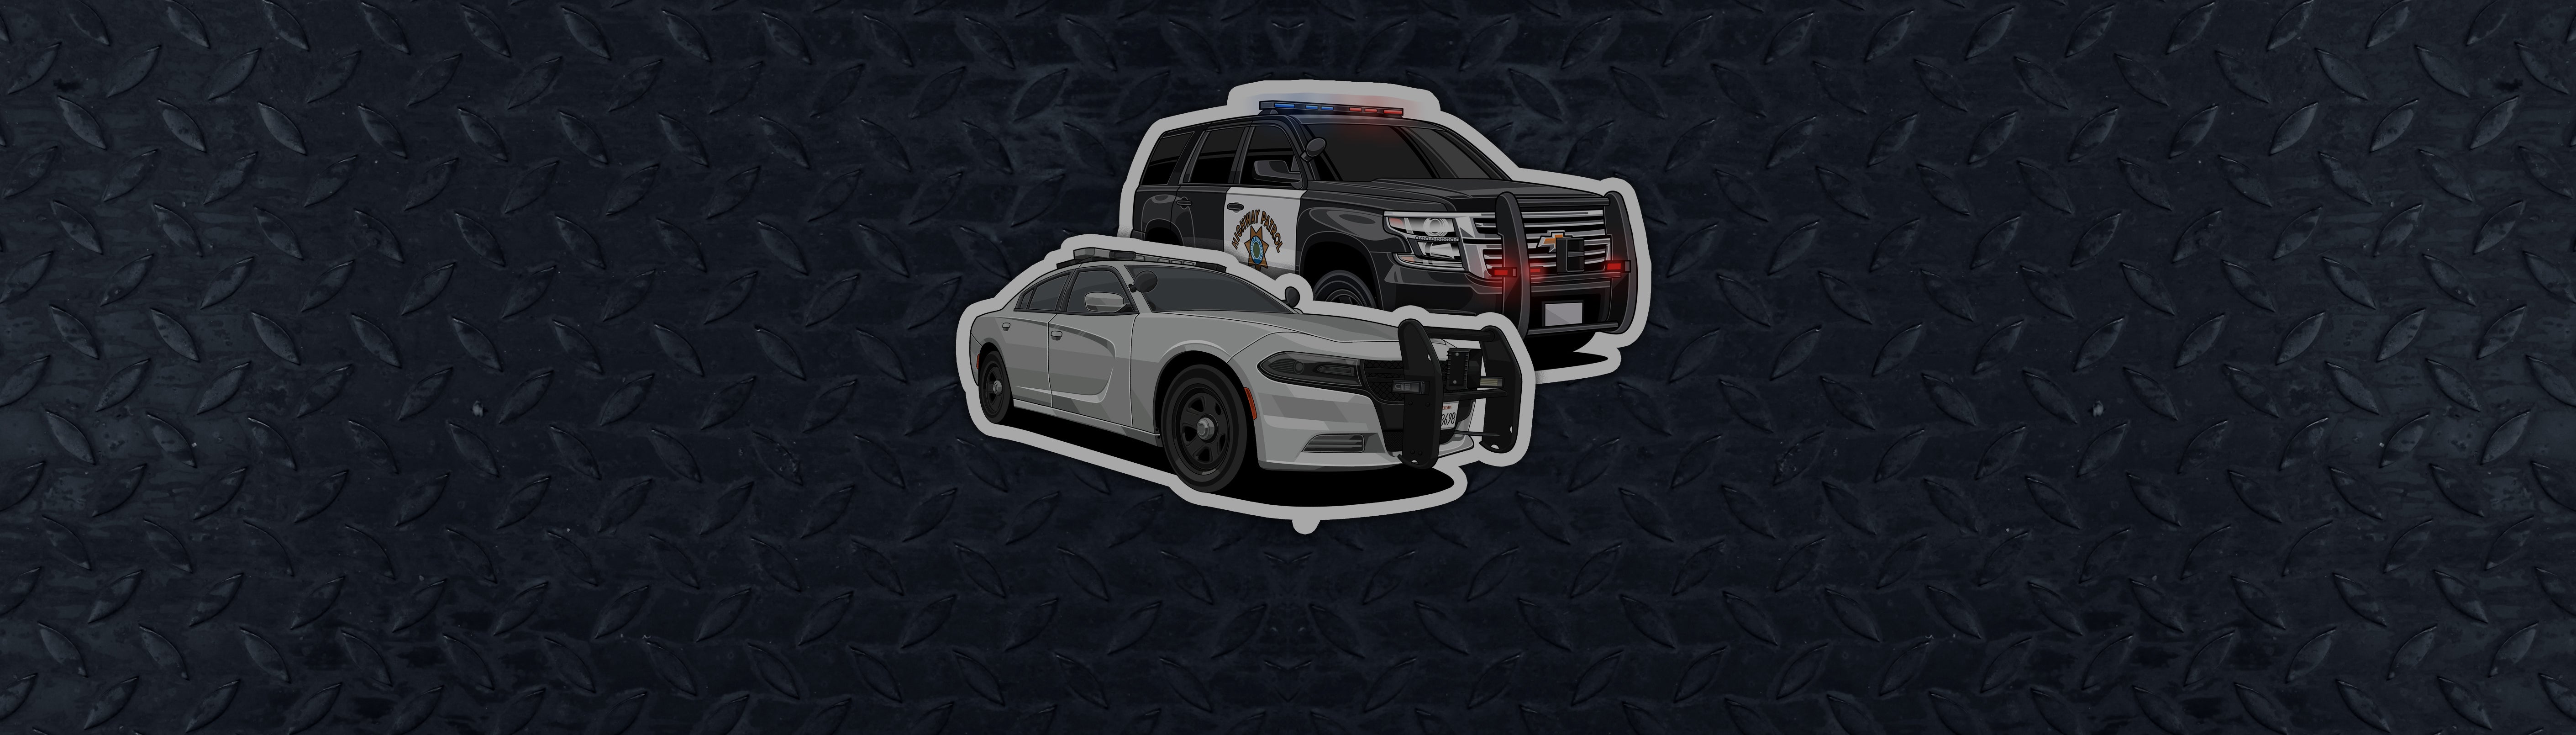 Police Vehicle Stickers - Police Car Stickers- StickerPRO.com